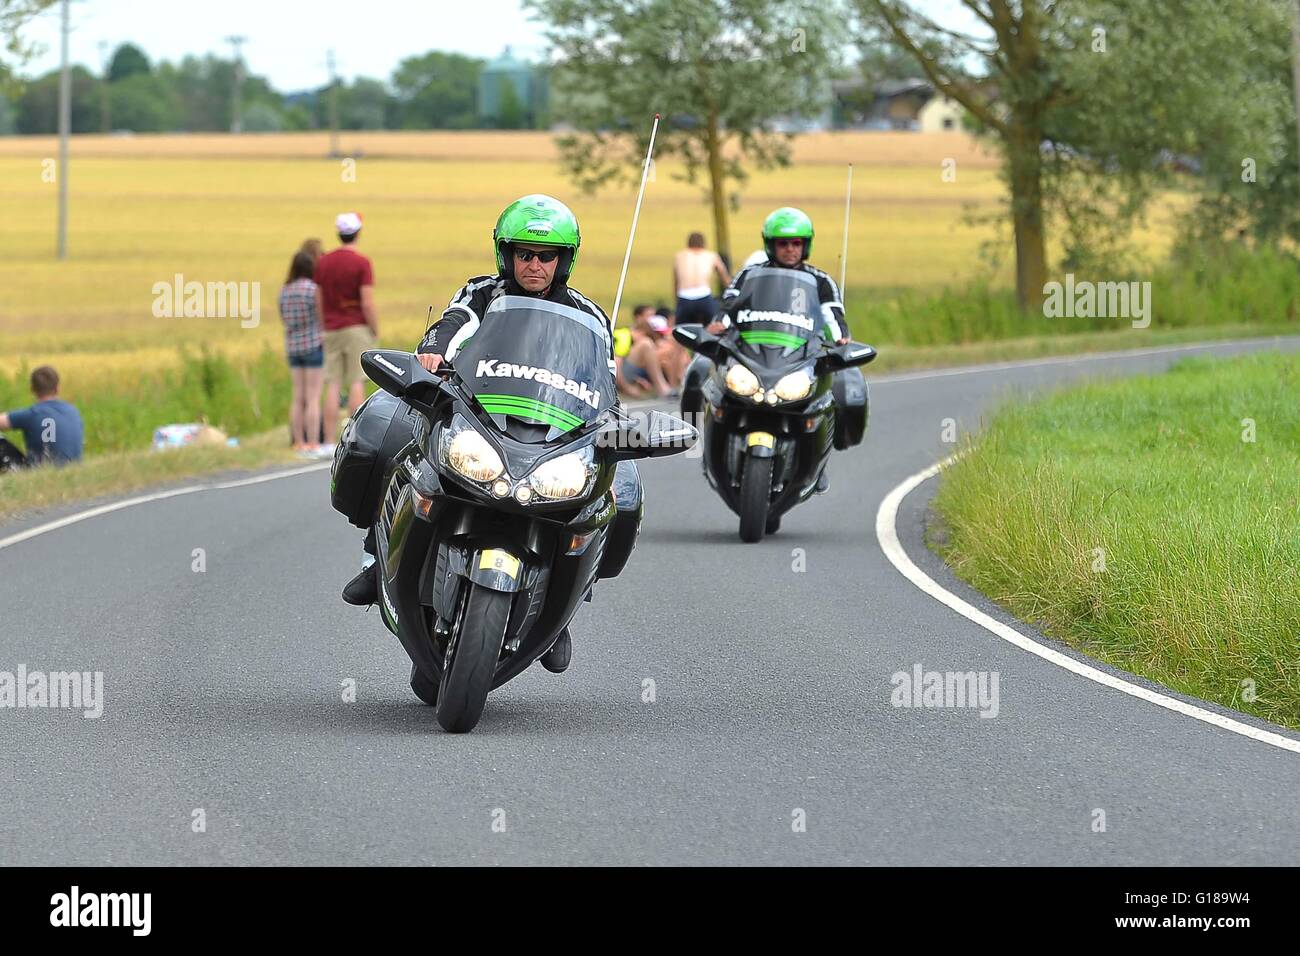 Le Tour de France UK Roxwell 2014 Motorradfahrer zwei Kawasaki Stockfoto